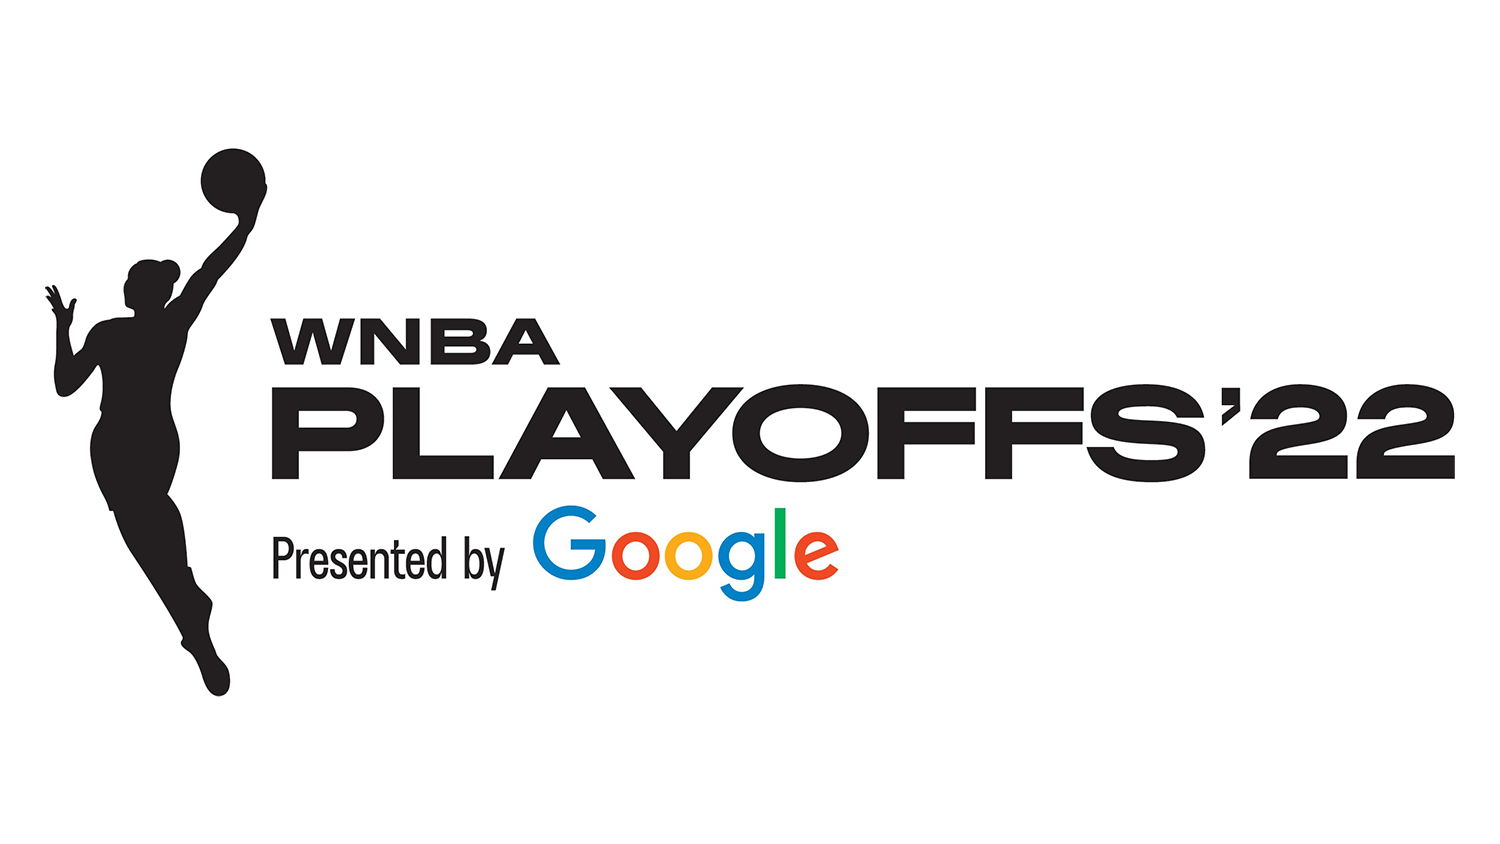 WNBA Semifinals Schedule Set